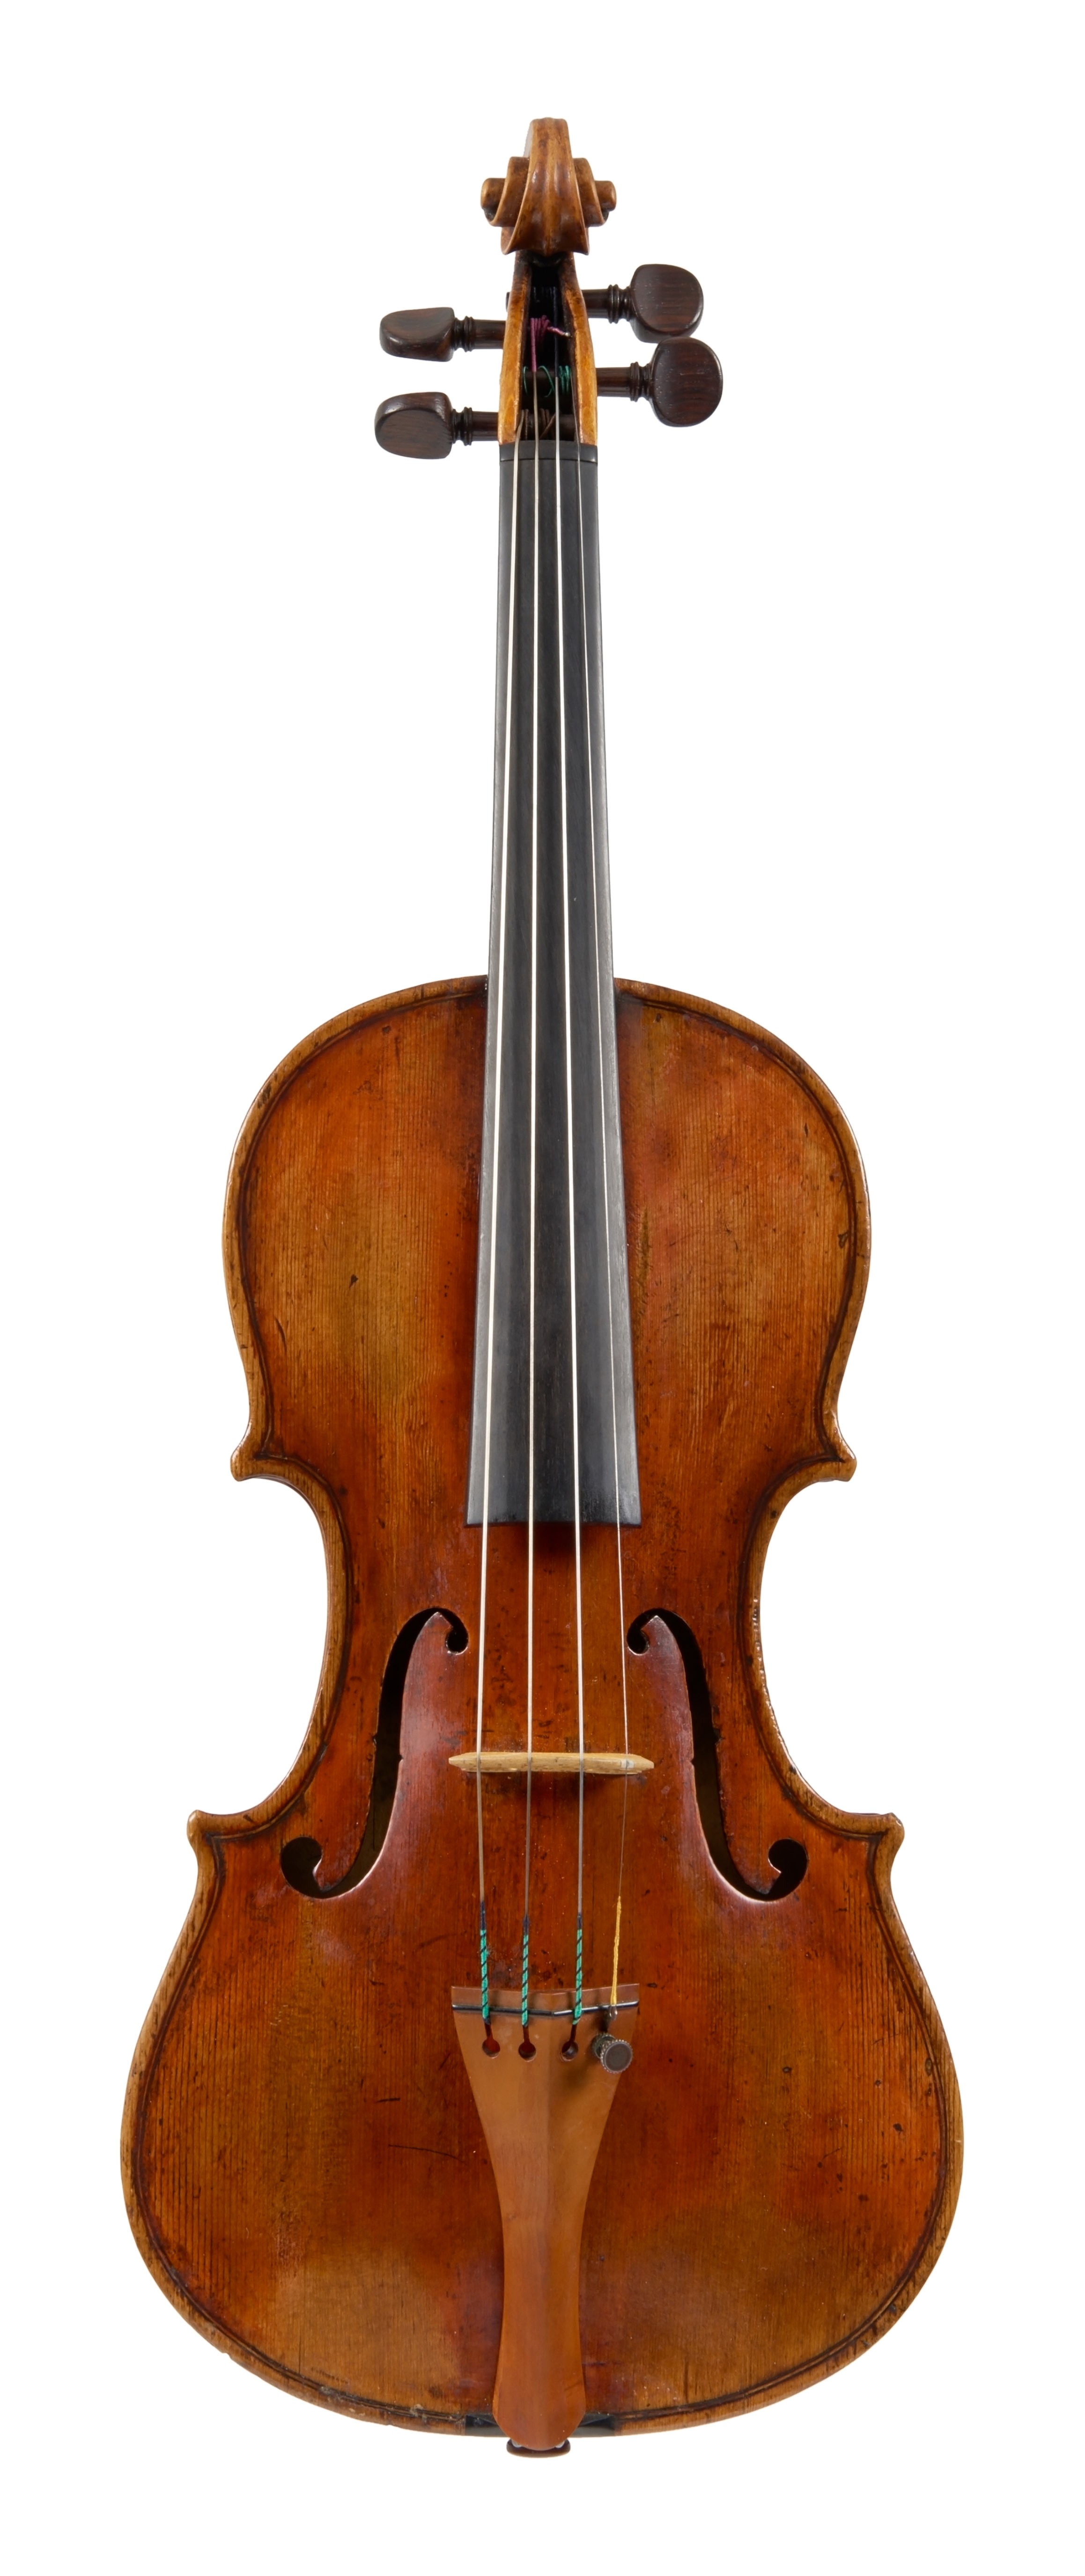 A 1775 Violin by Lorenzo Storioni in Cremona | Ingles u0026 Hayday